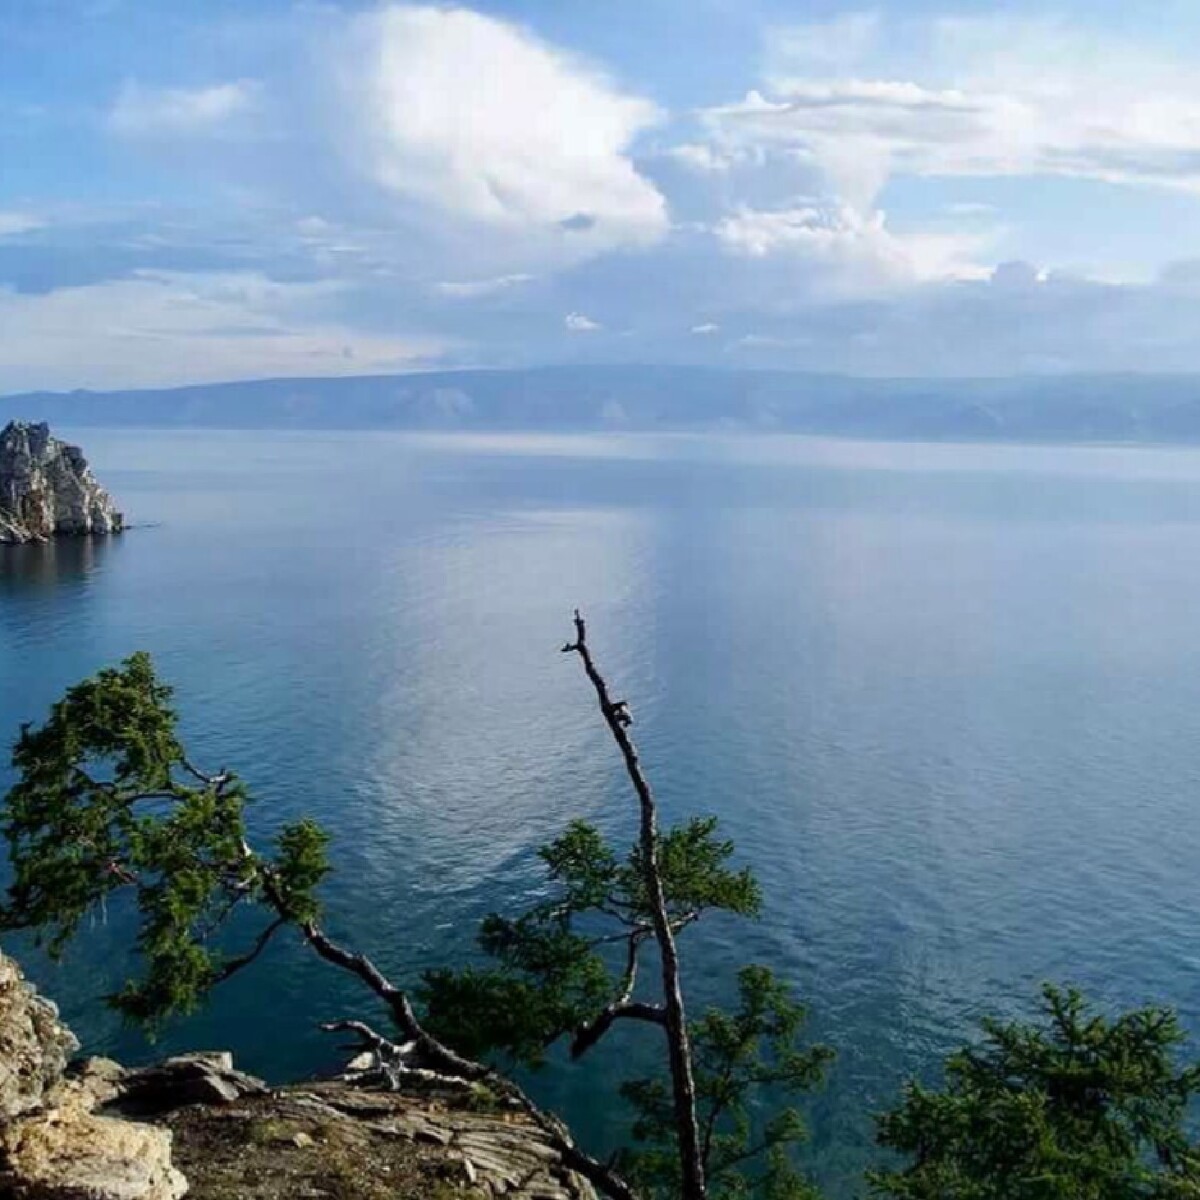 Про глубокое озеро. Озеро Байкал. Сибирское озеро Байкал. Байкал пресноводное озеро. Озеро Байкал, Восточная Сибирь.